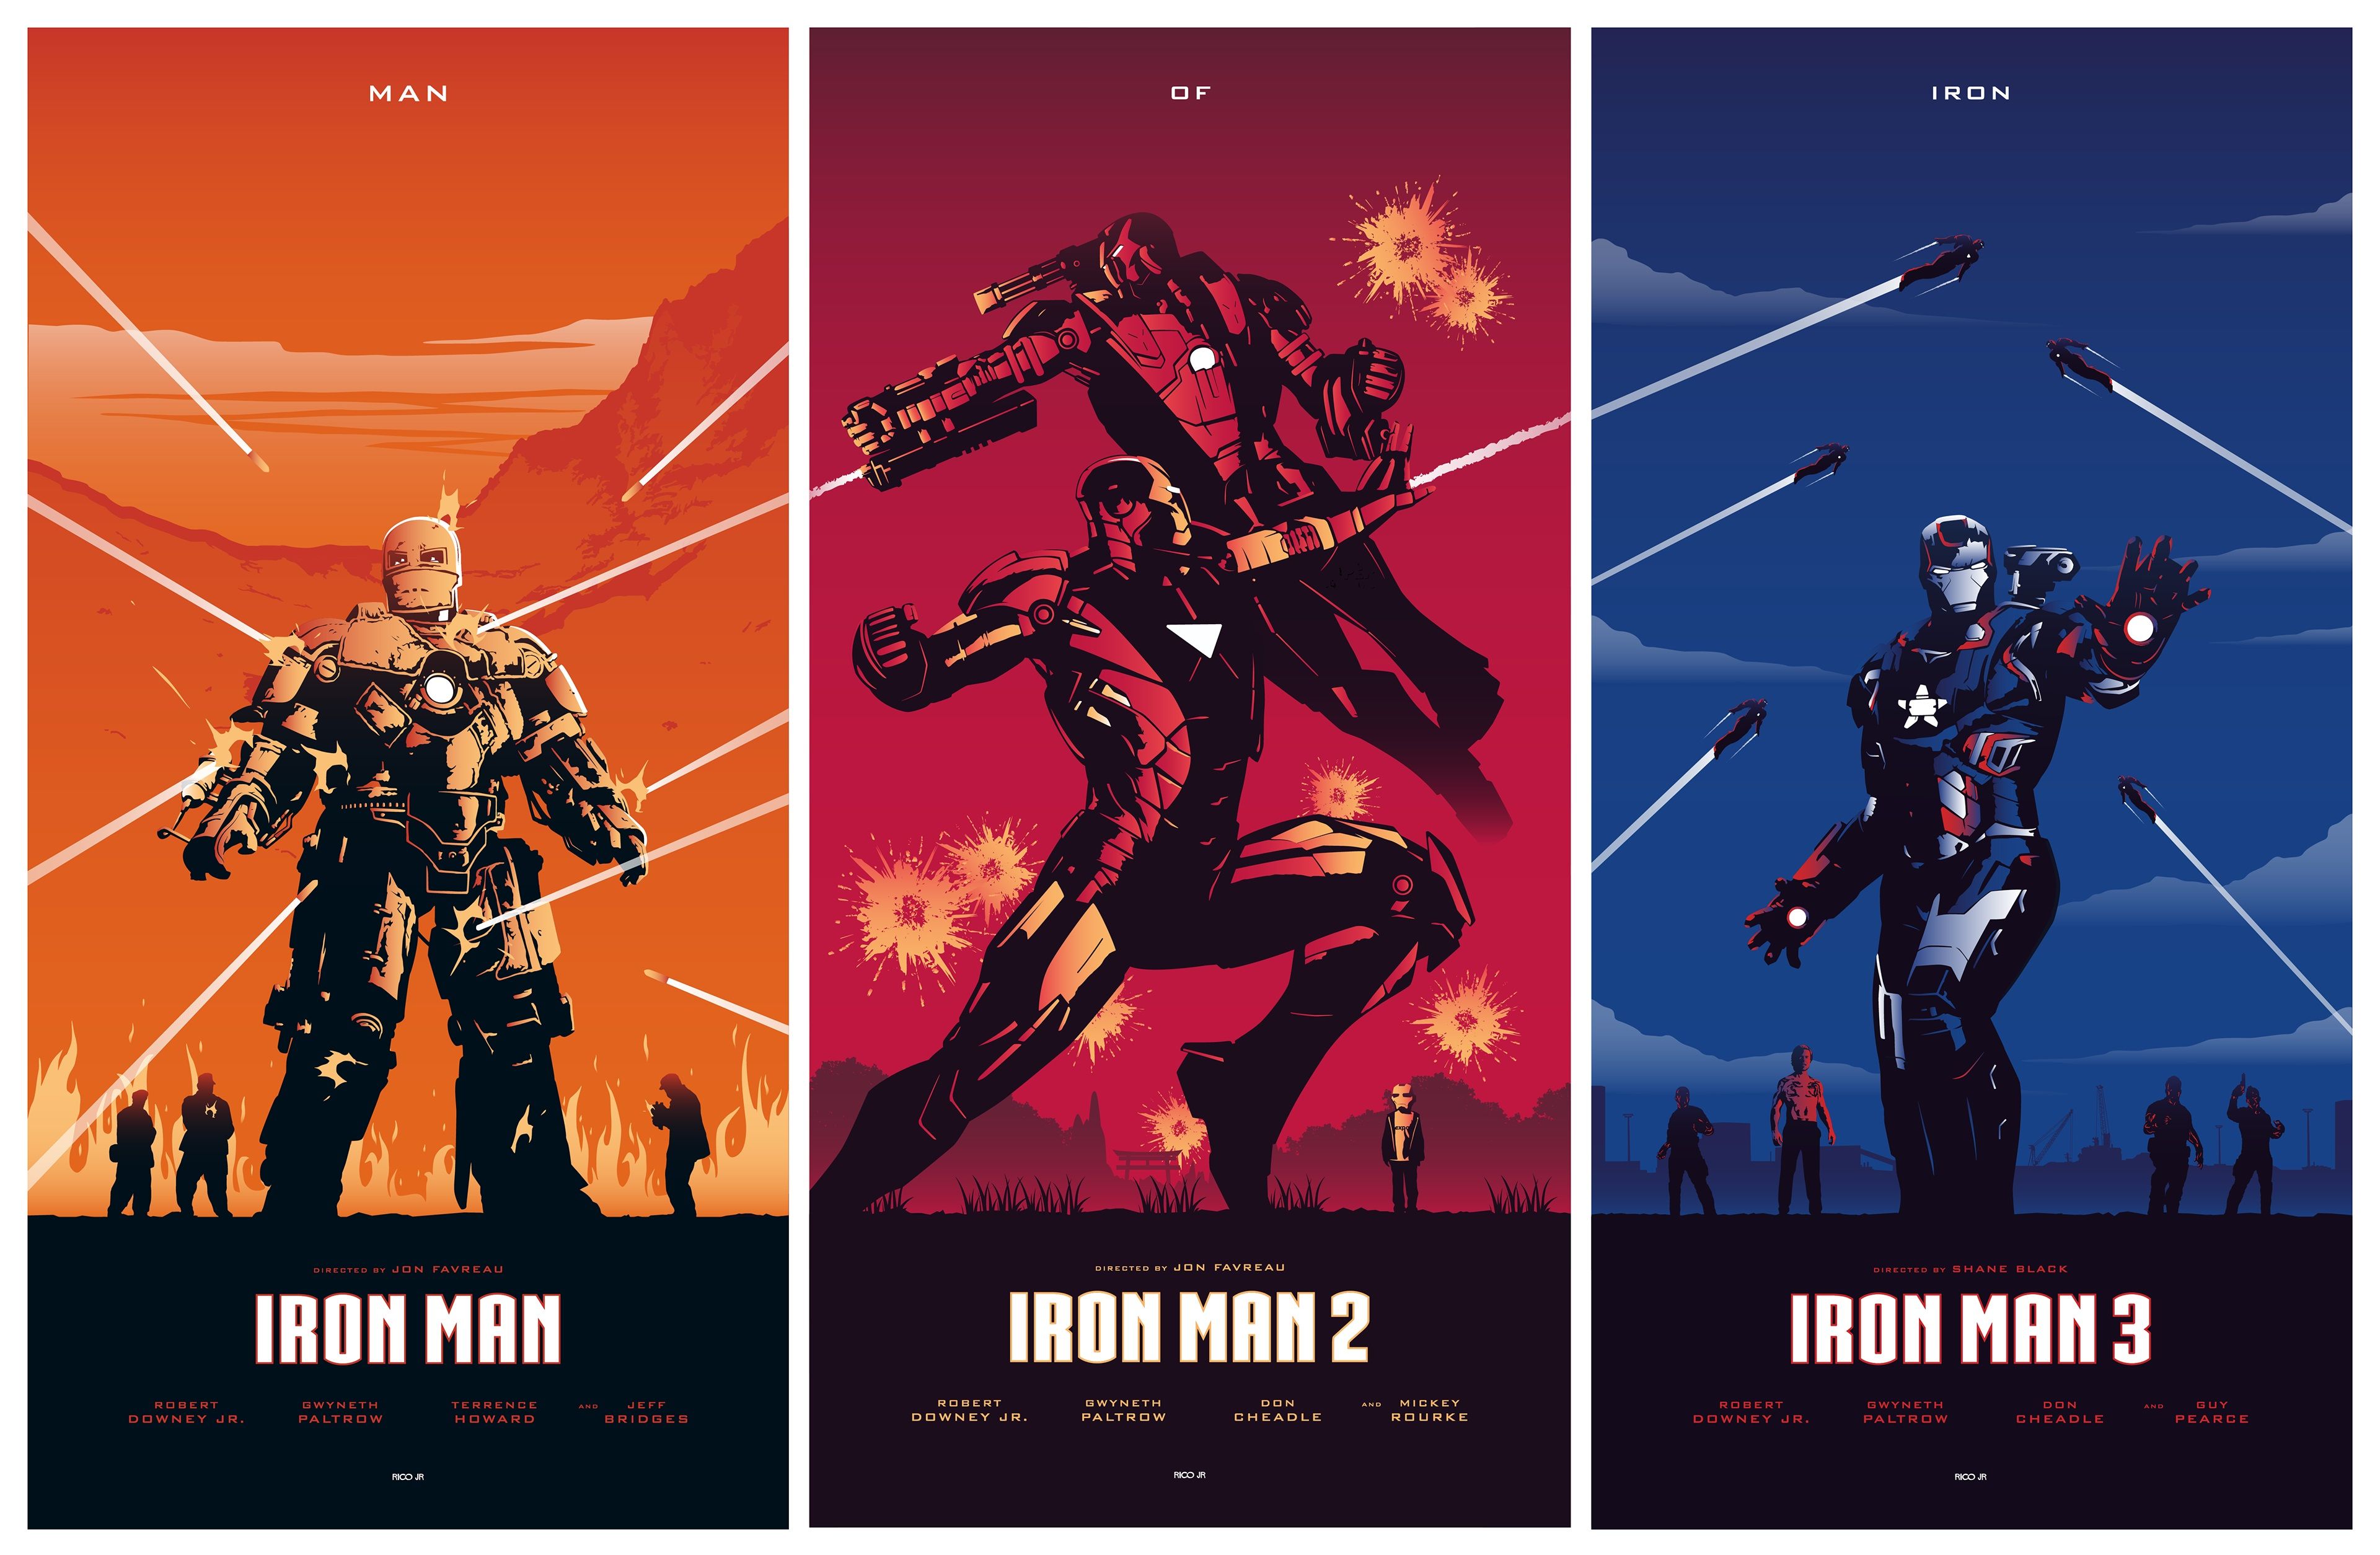 #collage, #Iron Man, #Marvel Cinematic Universe, #poster, #movie poster, #movies, #superhero, #Marvel Comics, wallpaper. Mocah HD Wallpaper